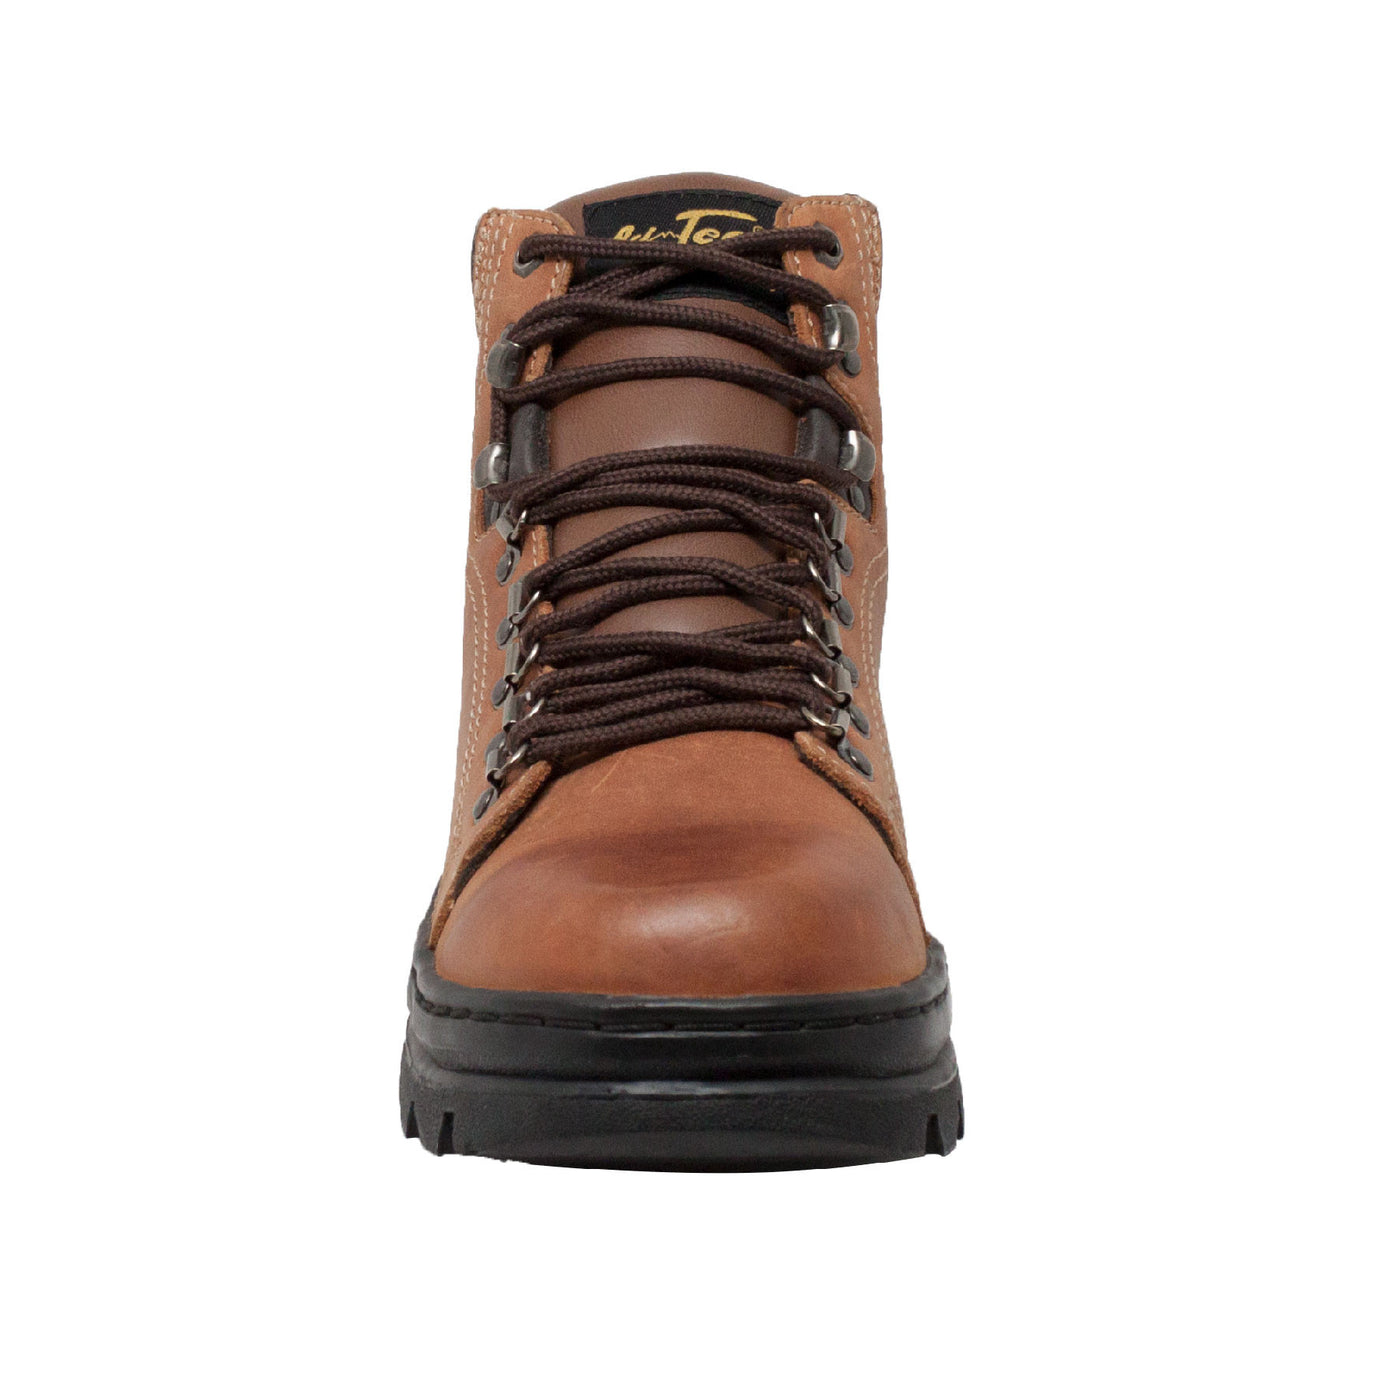 Men's 6"Brown Hiker - 1987 - Shop Genuine Leather men & women's boots online | AdTecFootWear